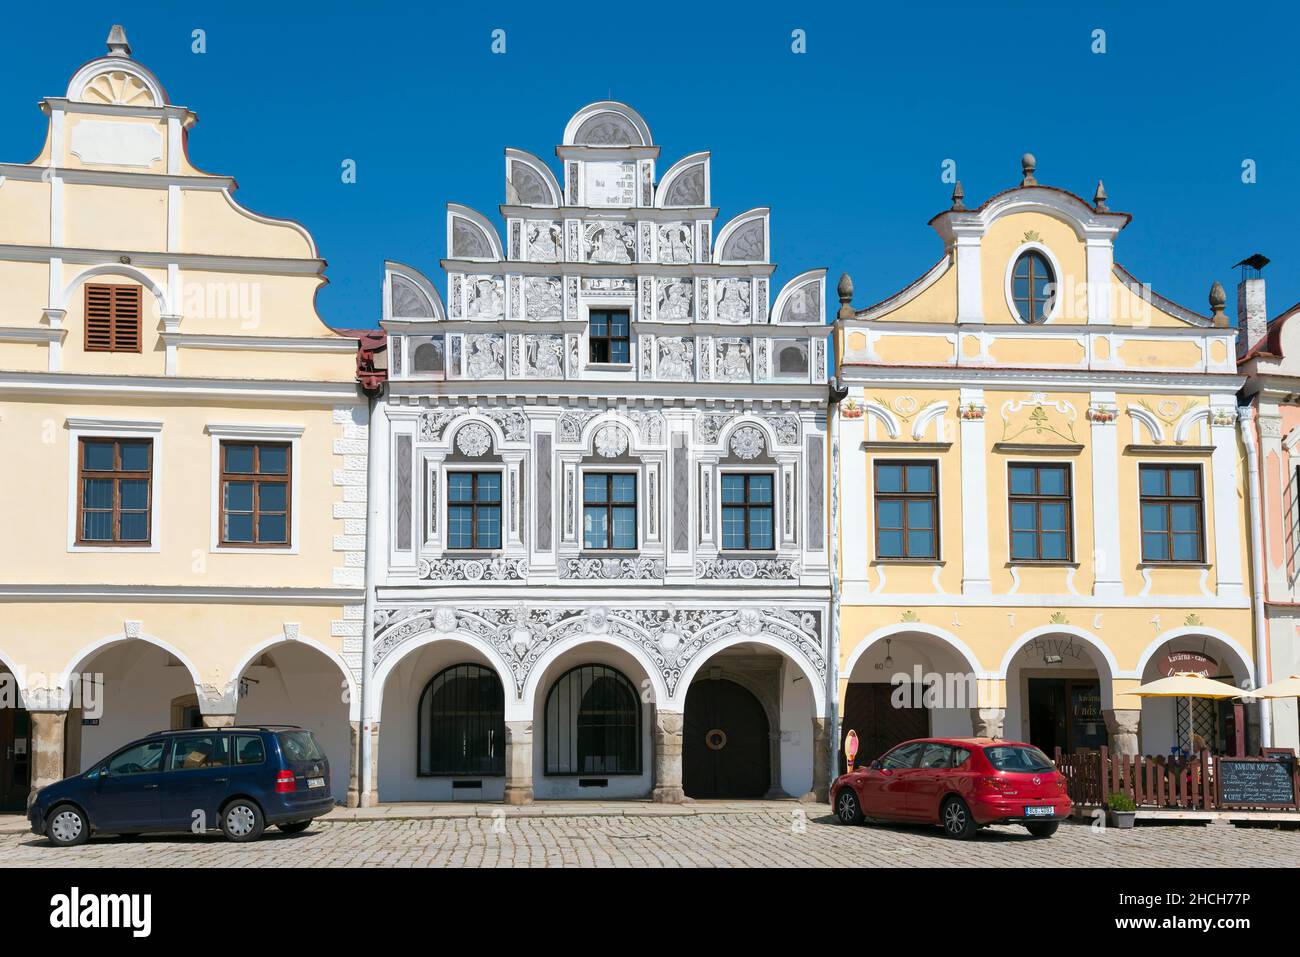 Sgraffito facade, town house, market square, old town, Telc, Tel, Okres Jihlava, district Jihlava, Kraj Vysocina, Moravia, Czech Republic Stock Photo